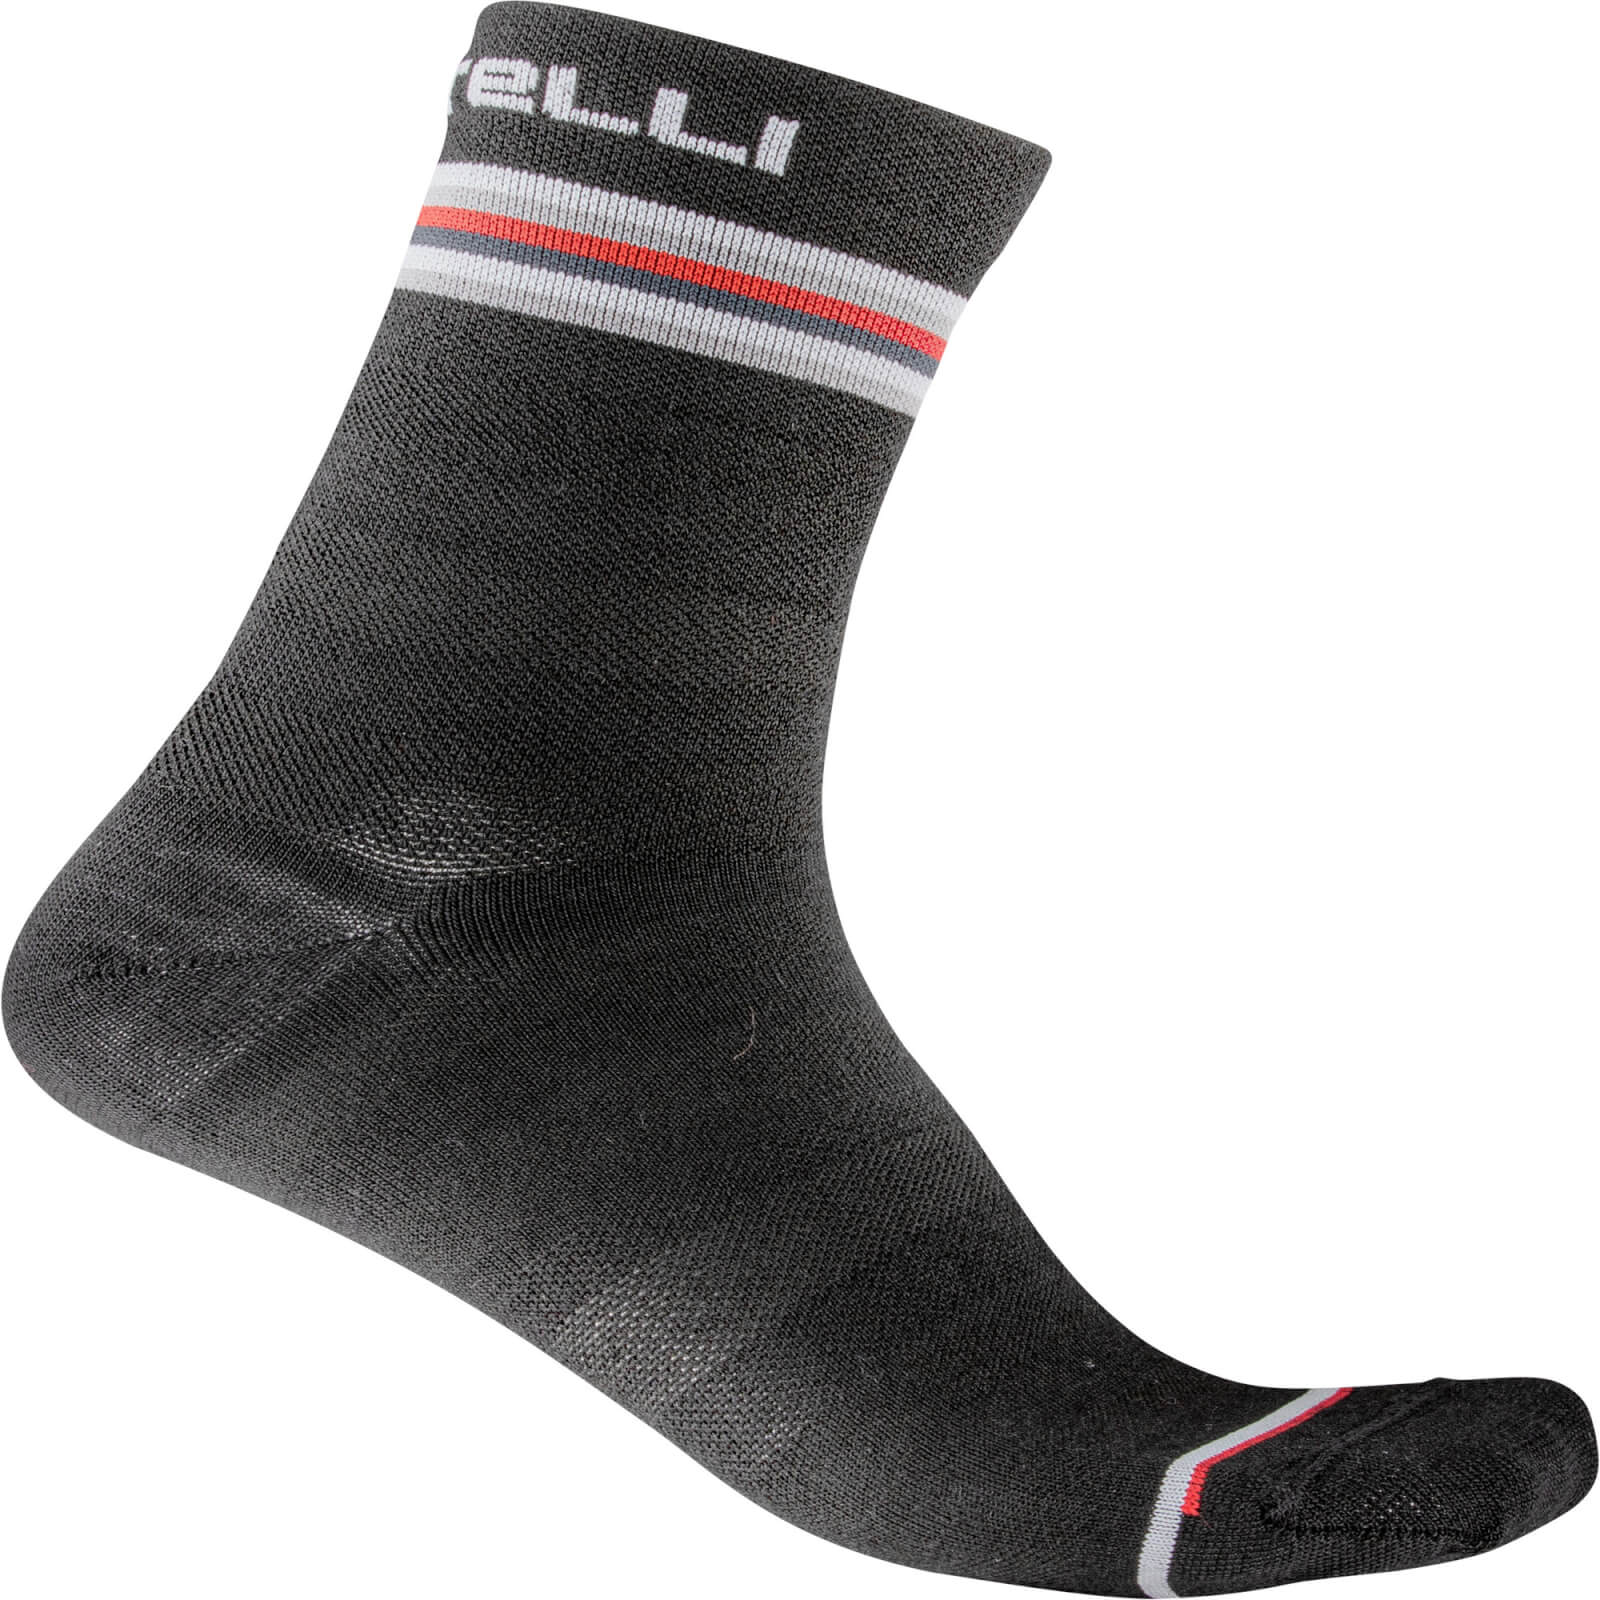 Castelli Women's Go 15 Socks - L/XL - Dark Grey/White/Red